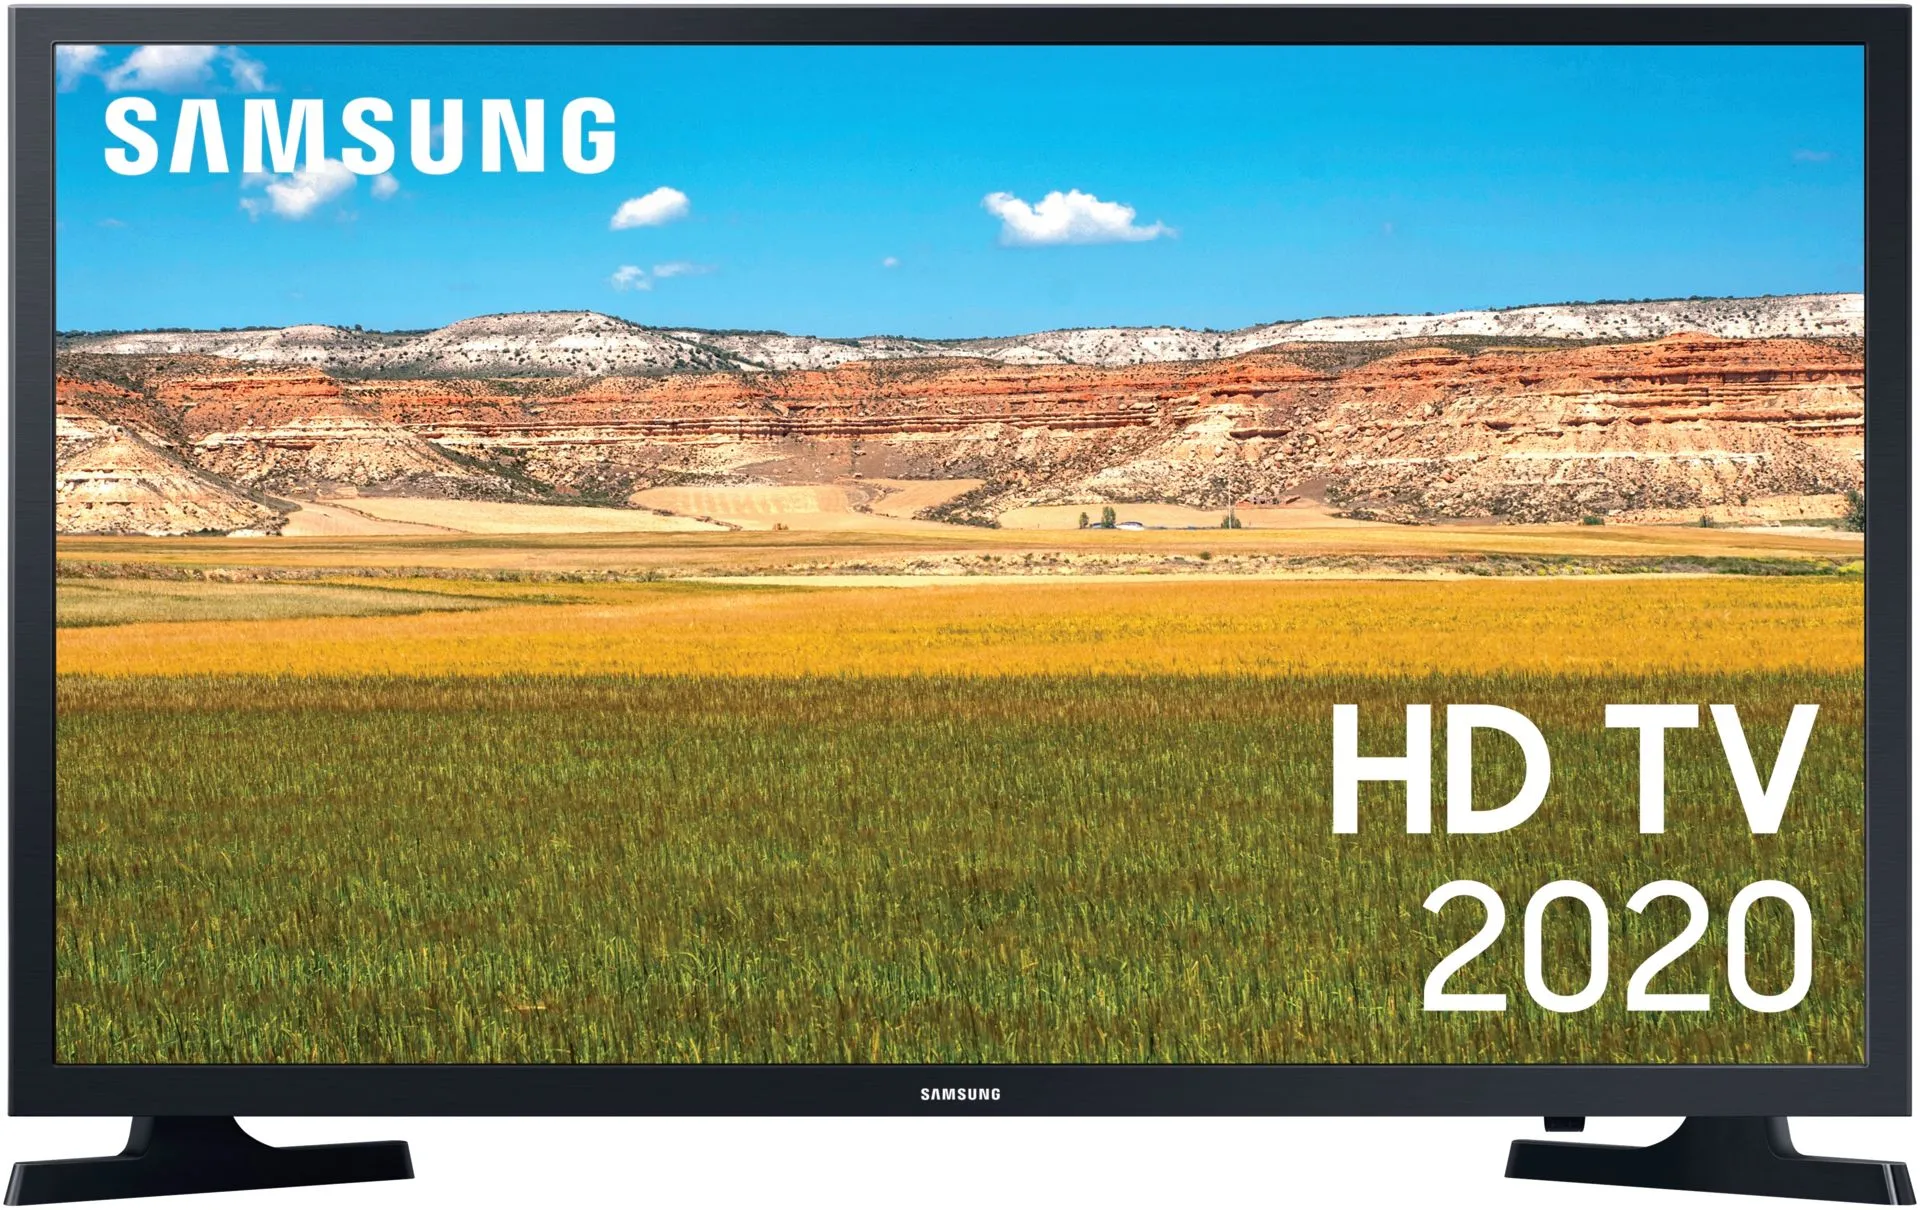 Samsung UE32T4305 32" HD Ready Smart TV - 1